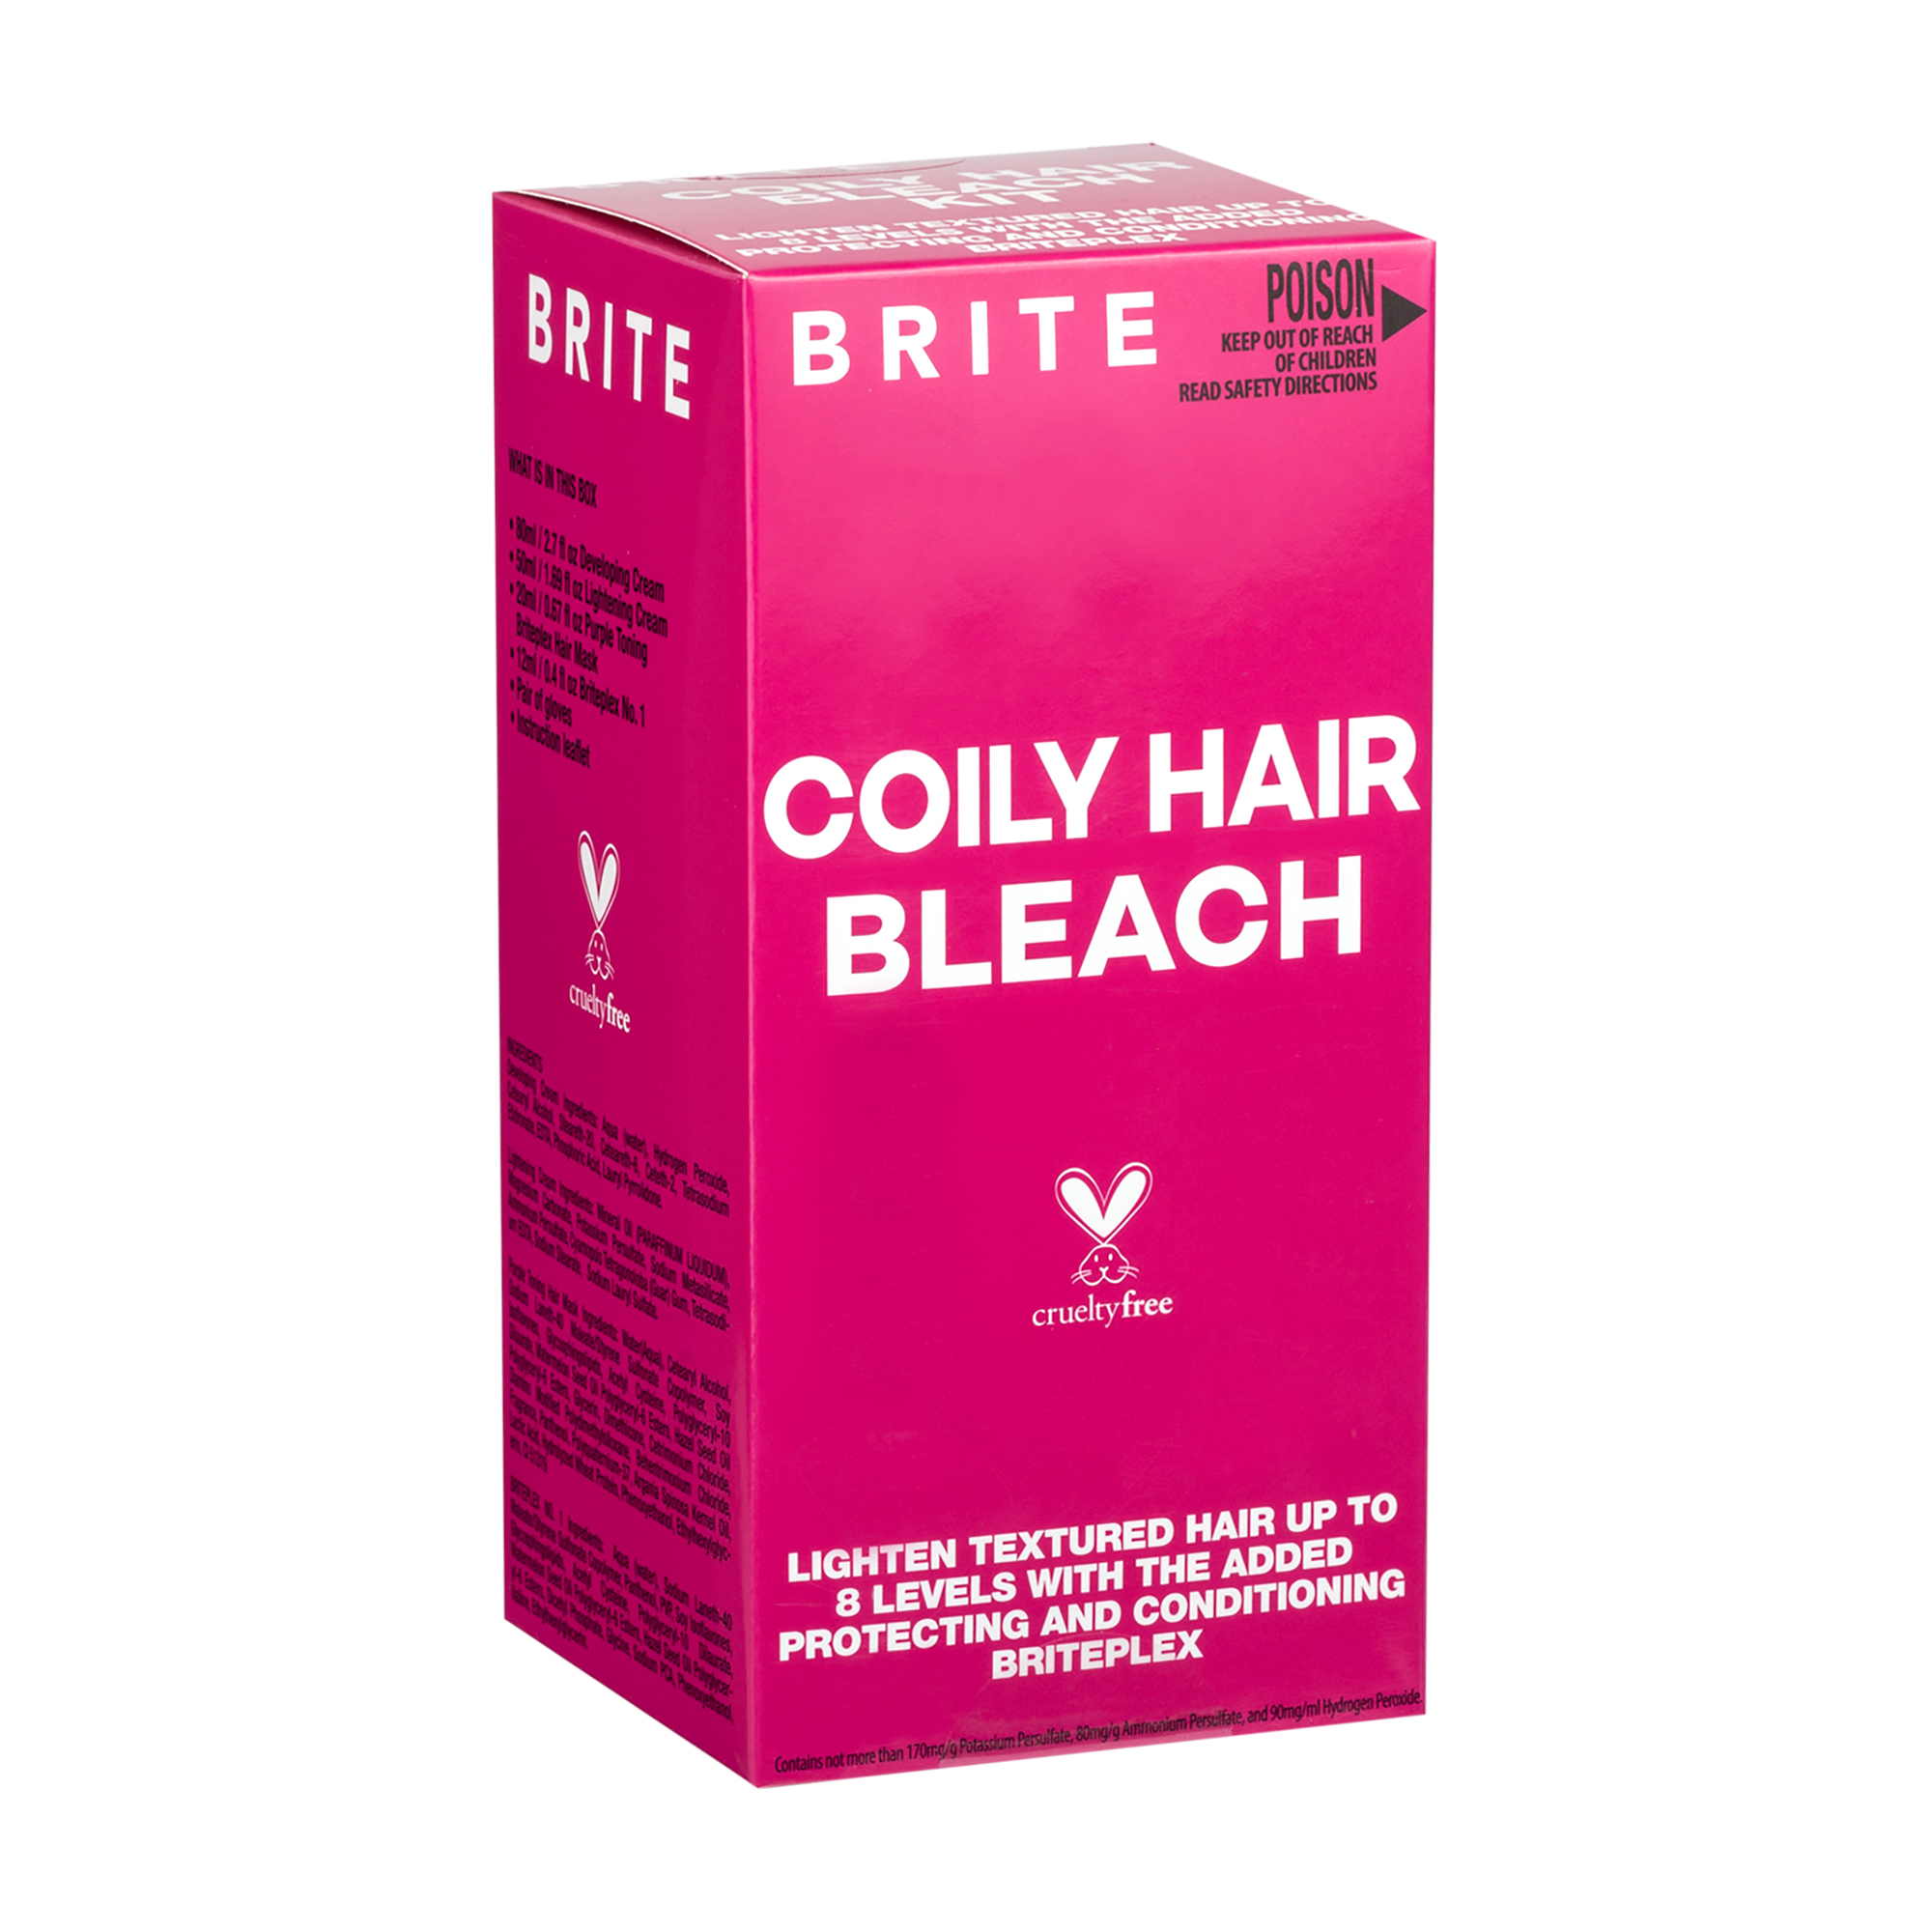 BRITE Coily Hair Bleach for Textured or Curly hair, Dust-Free, Ammonia-Free, Vegan, Cruelty Free, Cream Bleach Formula, 8.4 oz - image 1 of 6